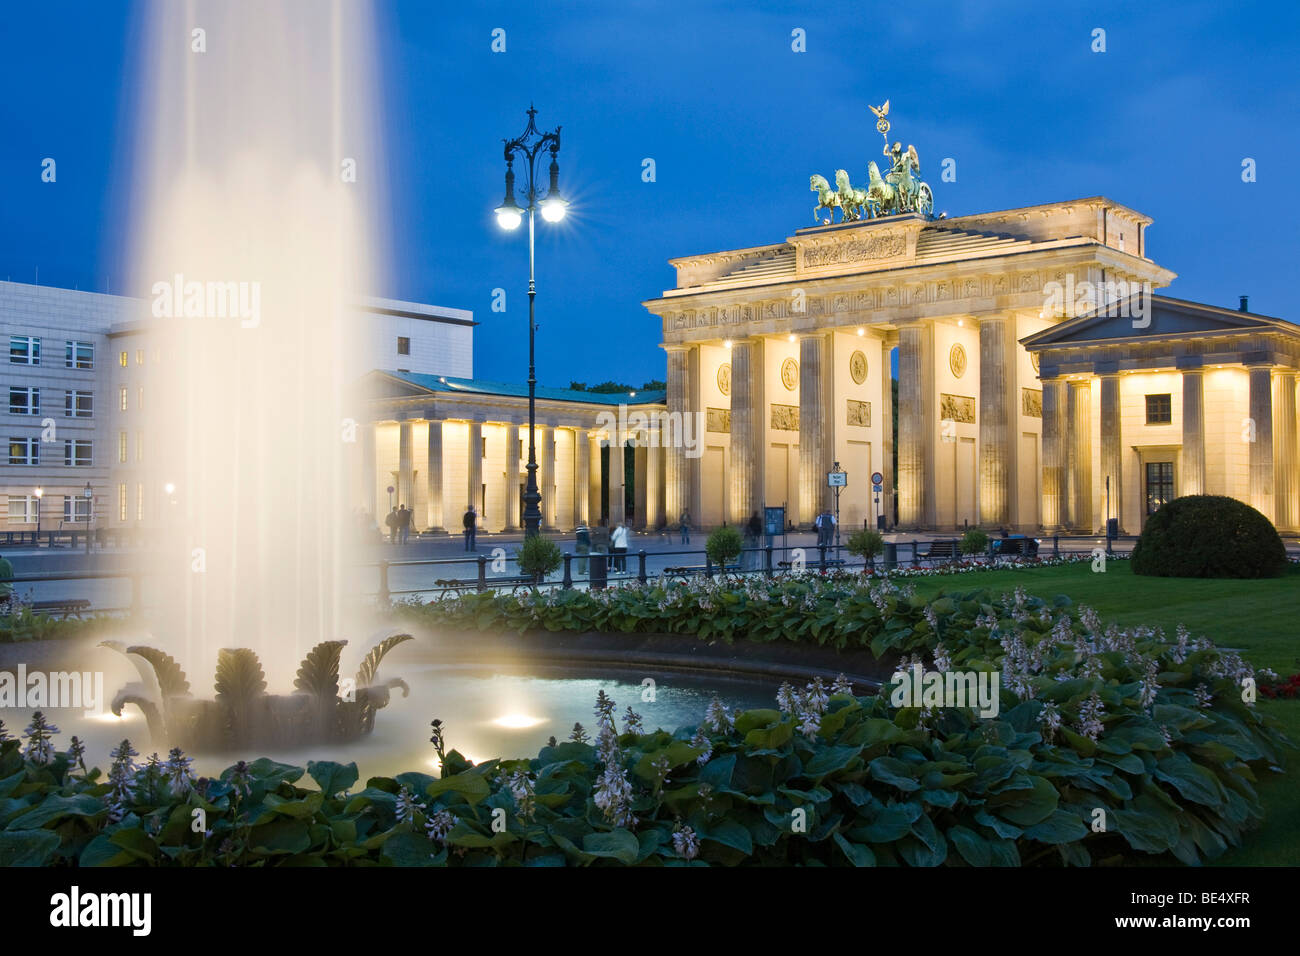 Pariser Platz square, with fountains and Brandenburg Gate, Mitte, Berlin, Germany, Europe Stock Photo